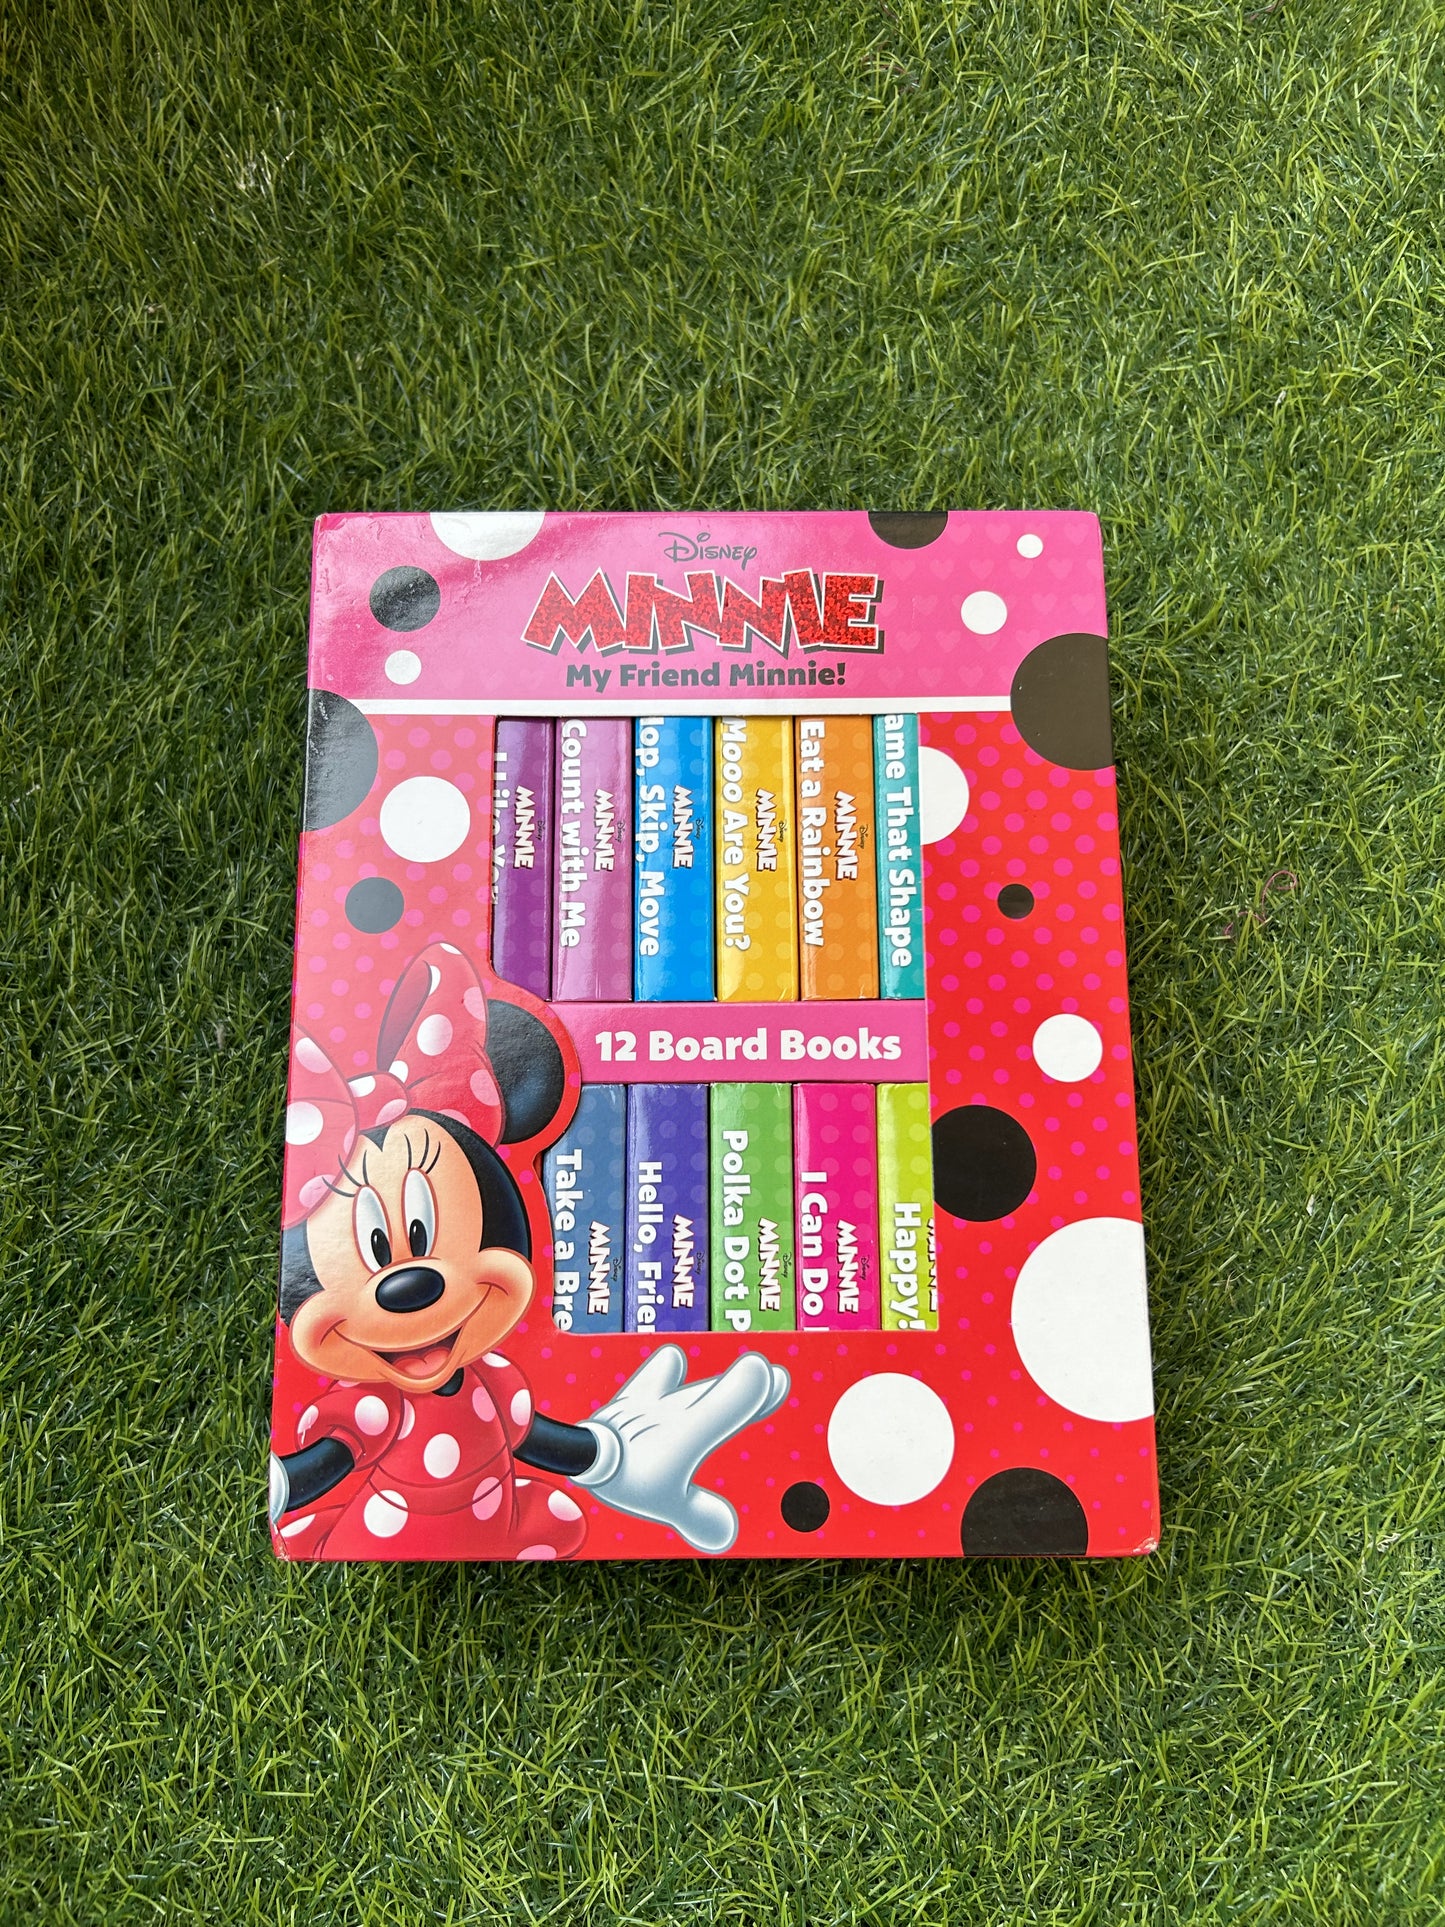 Disney Baby 12 Board Books